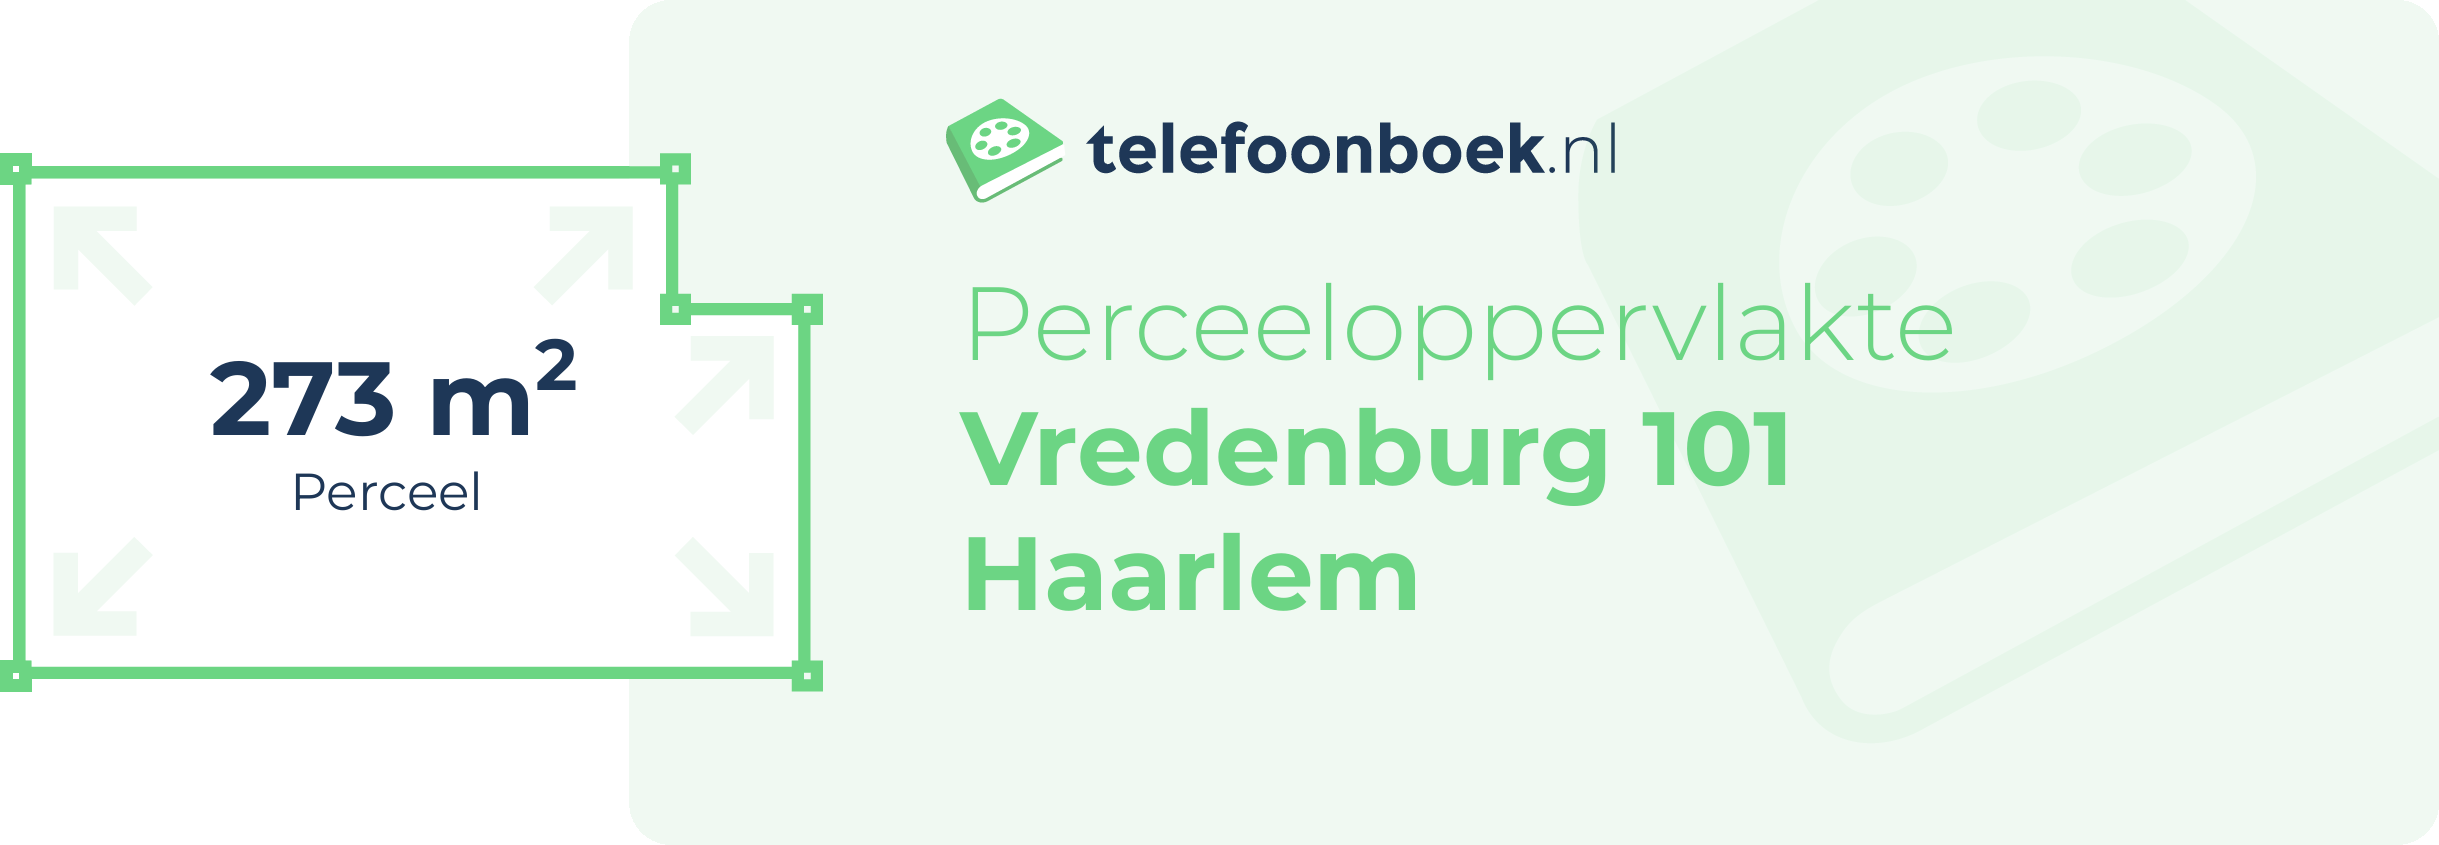 Perceeloppervlakte Vredenburg 101 Haarlem